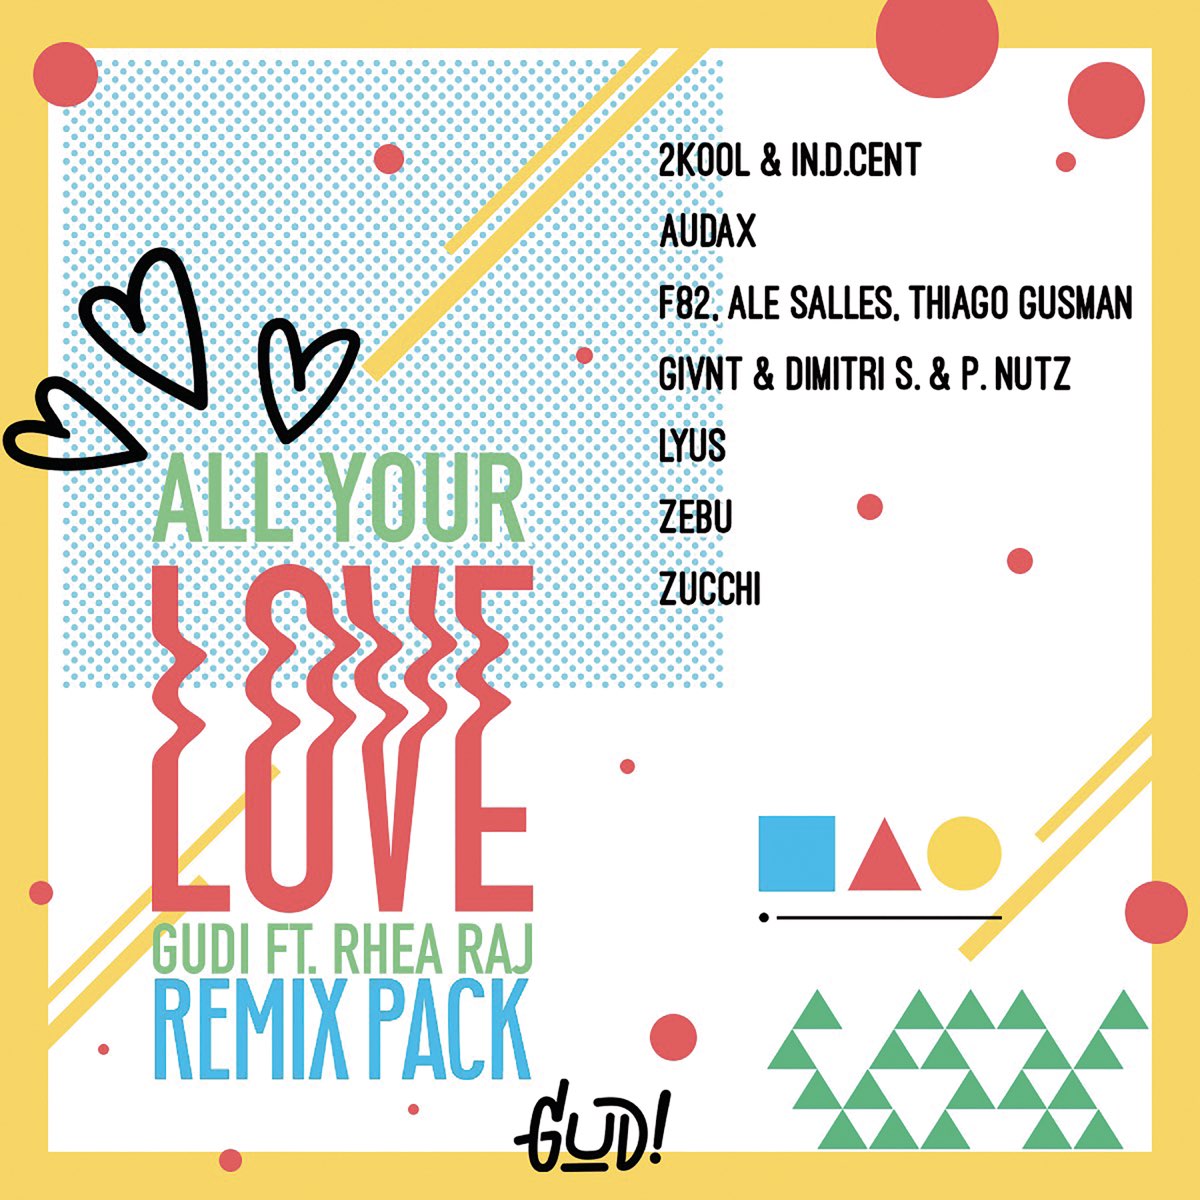 Your love remixes